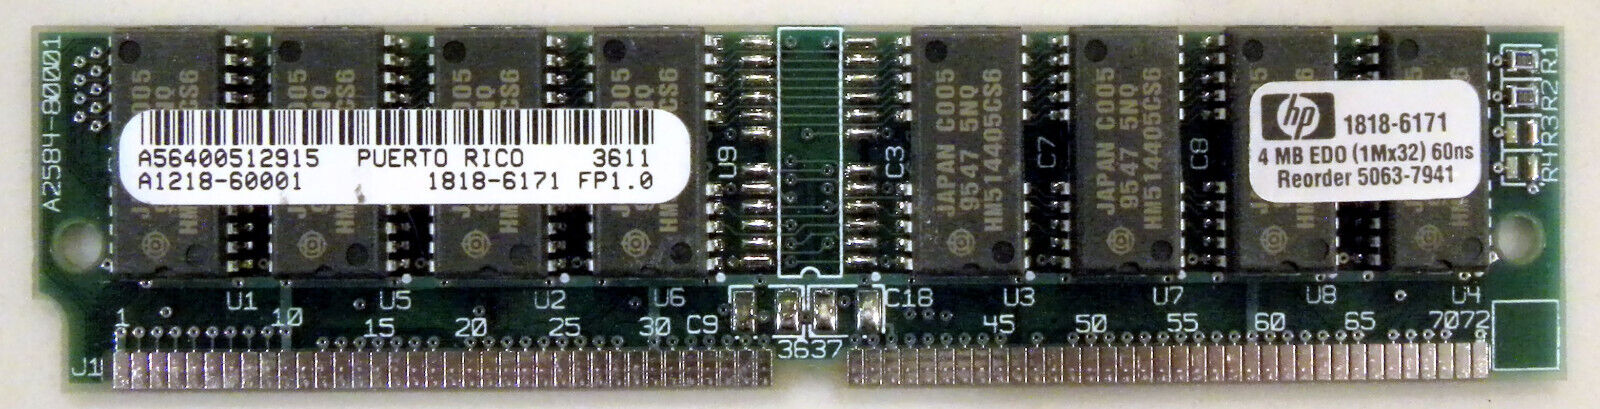 HP 16MB=4x4mb EDO 72Pin 60ns RAM SIMM 1818-6171 Low-Profile Upgradable 